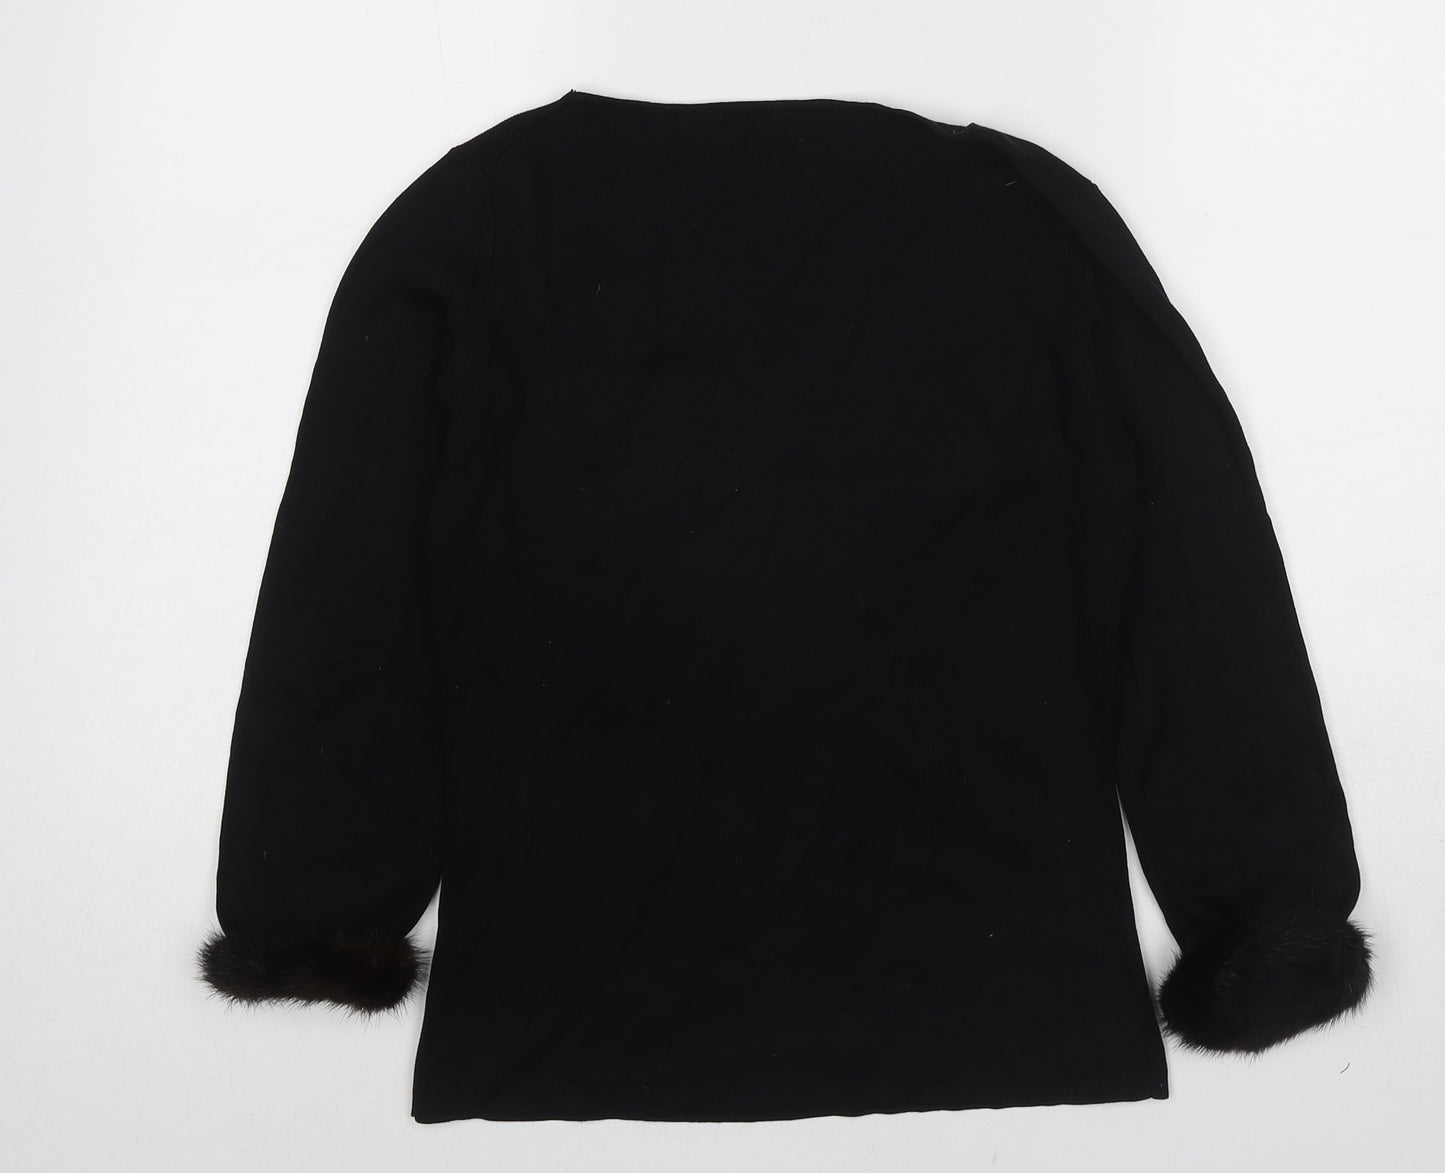 Harold's Womens Black V-Neck Silk Pullover Jumper Size S